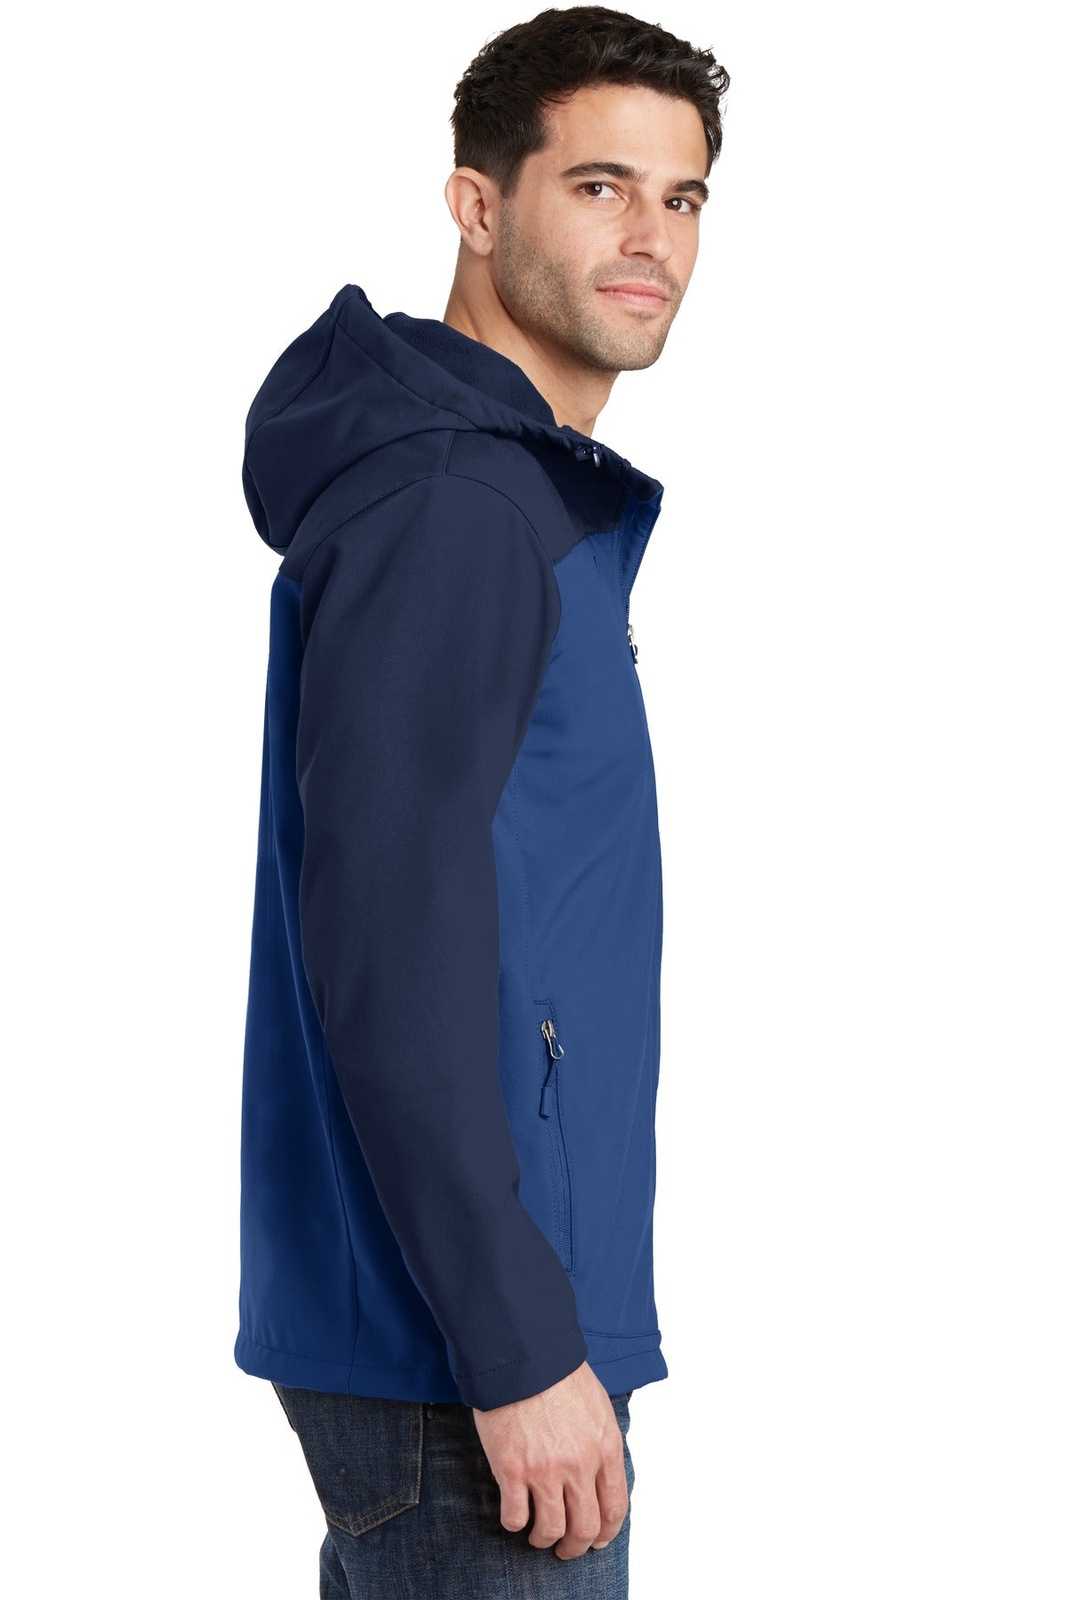 Port Authority J335 Hooded Core Soft Shell Jacket - Night Sky Blue Dress Blue Navy - HIT a Double - 3